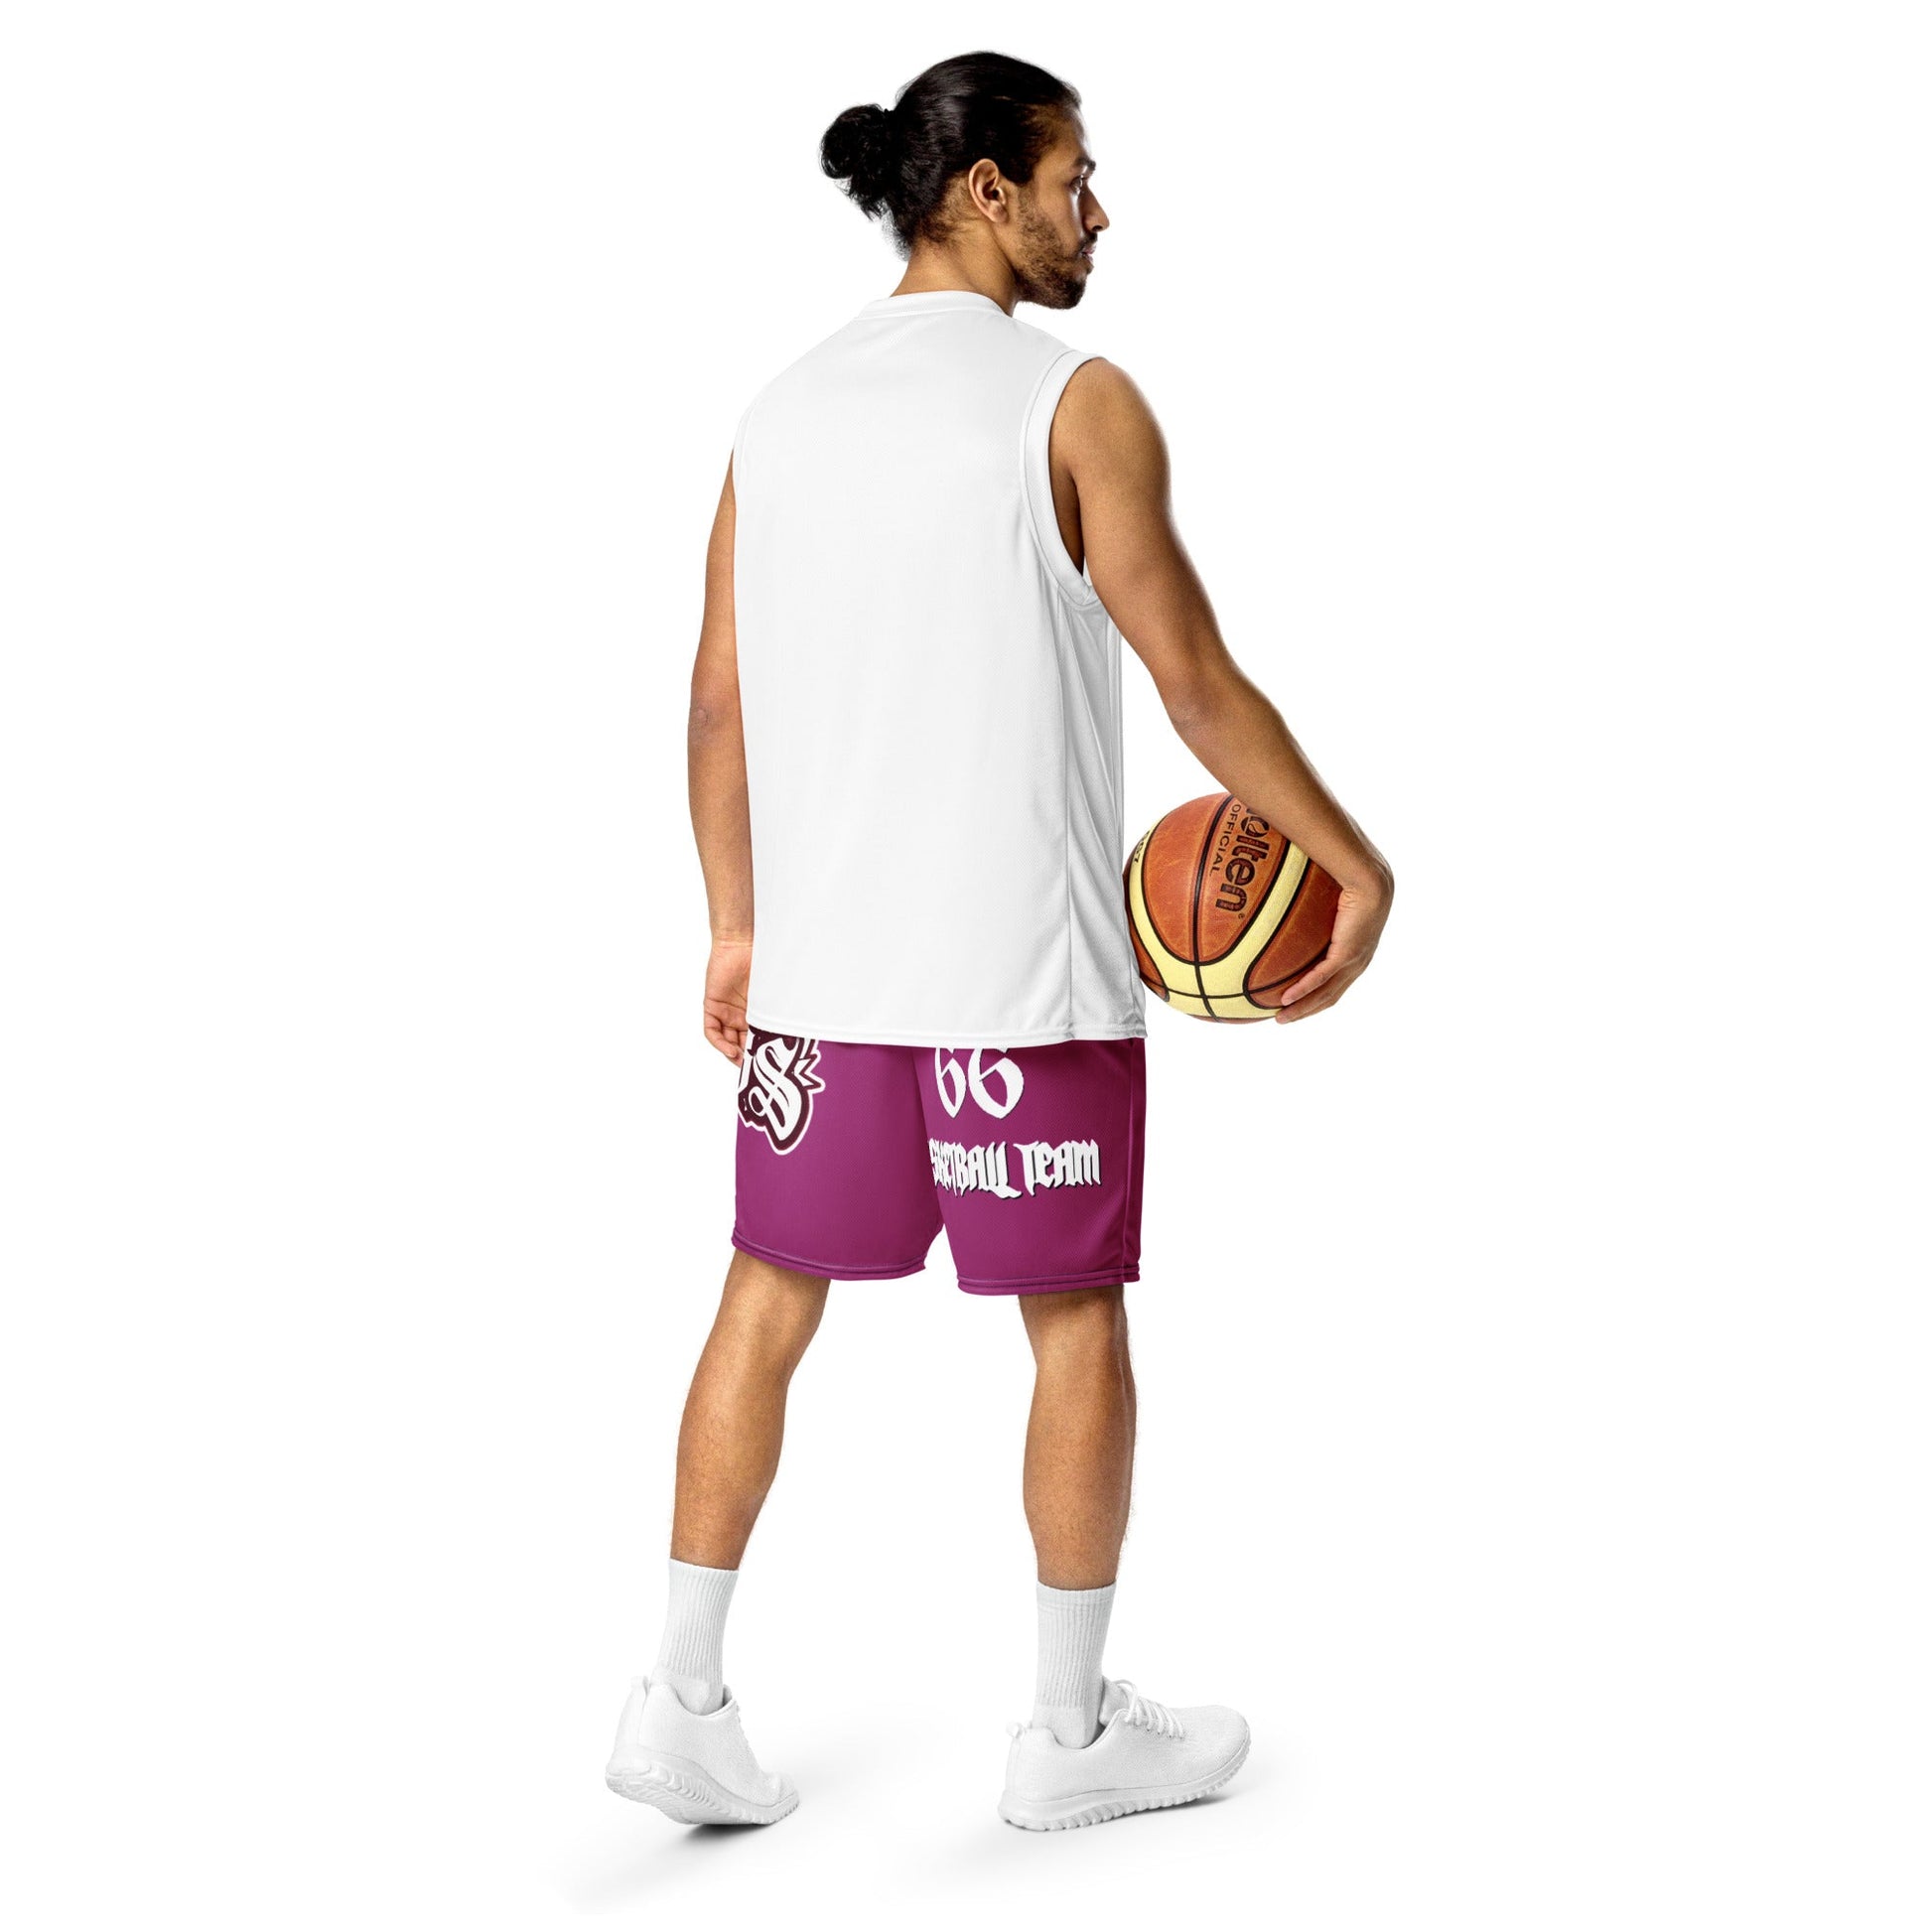 Basketball Team 66 Unisex Mesh-Shorts PURPLE - BLOODY-STREETS.DE Streetwear Herren und Damen Hoodies, T-Shirts, Pullis